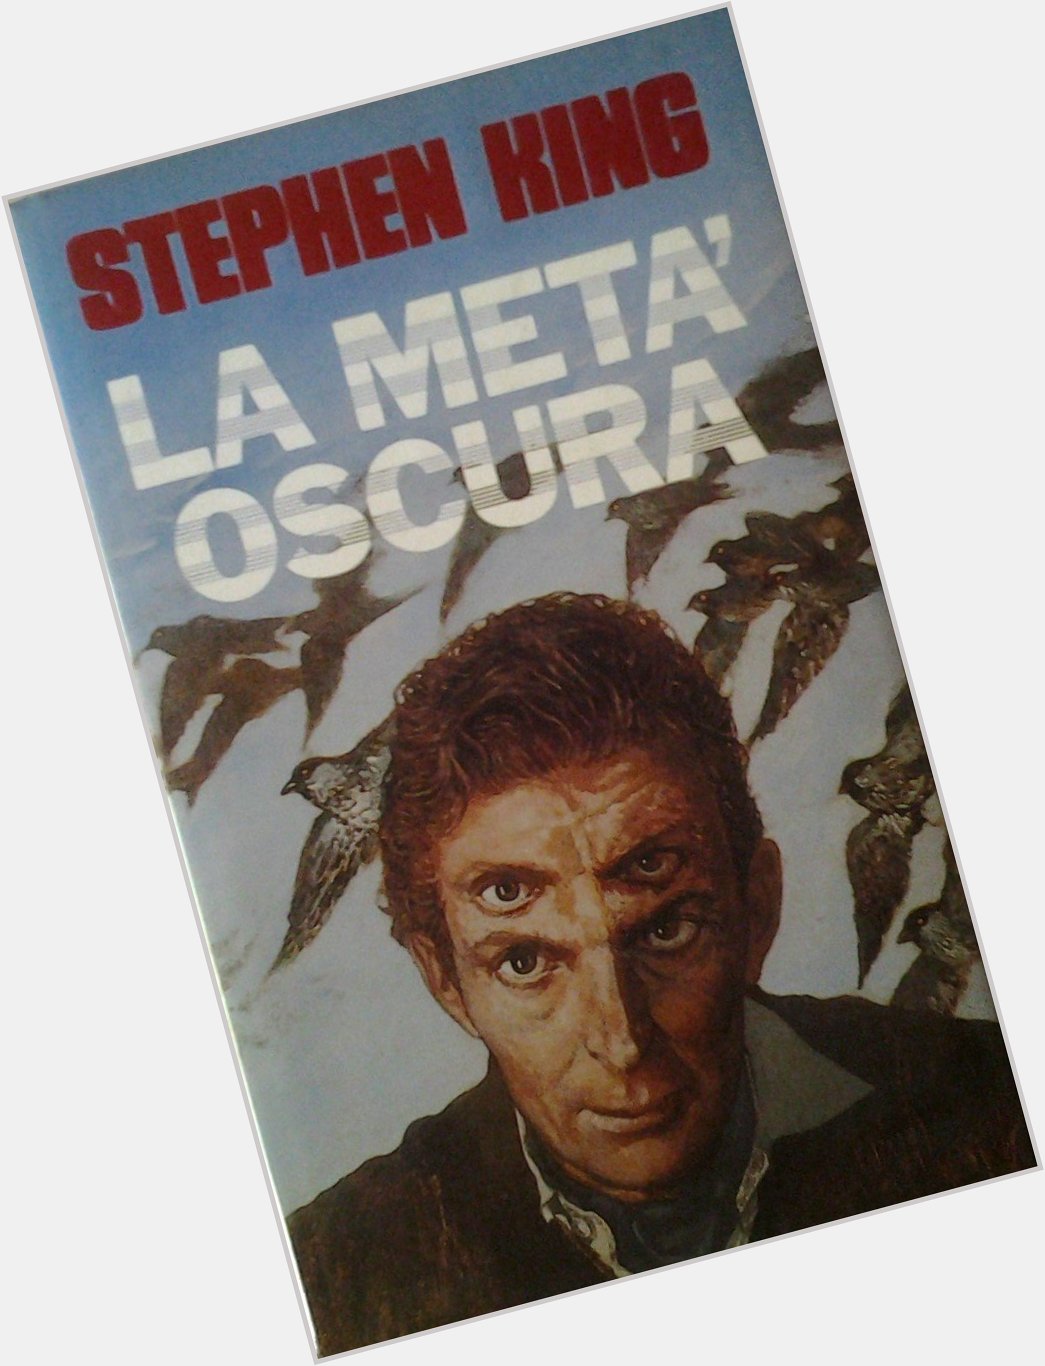 The Dark Half by Stephen King.

Italian edition.

Happy birthday  